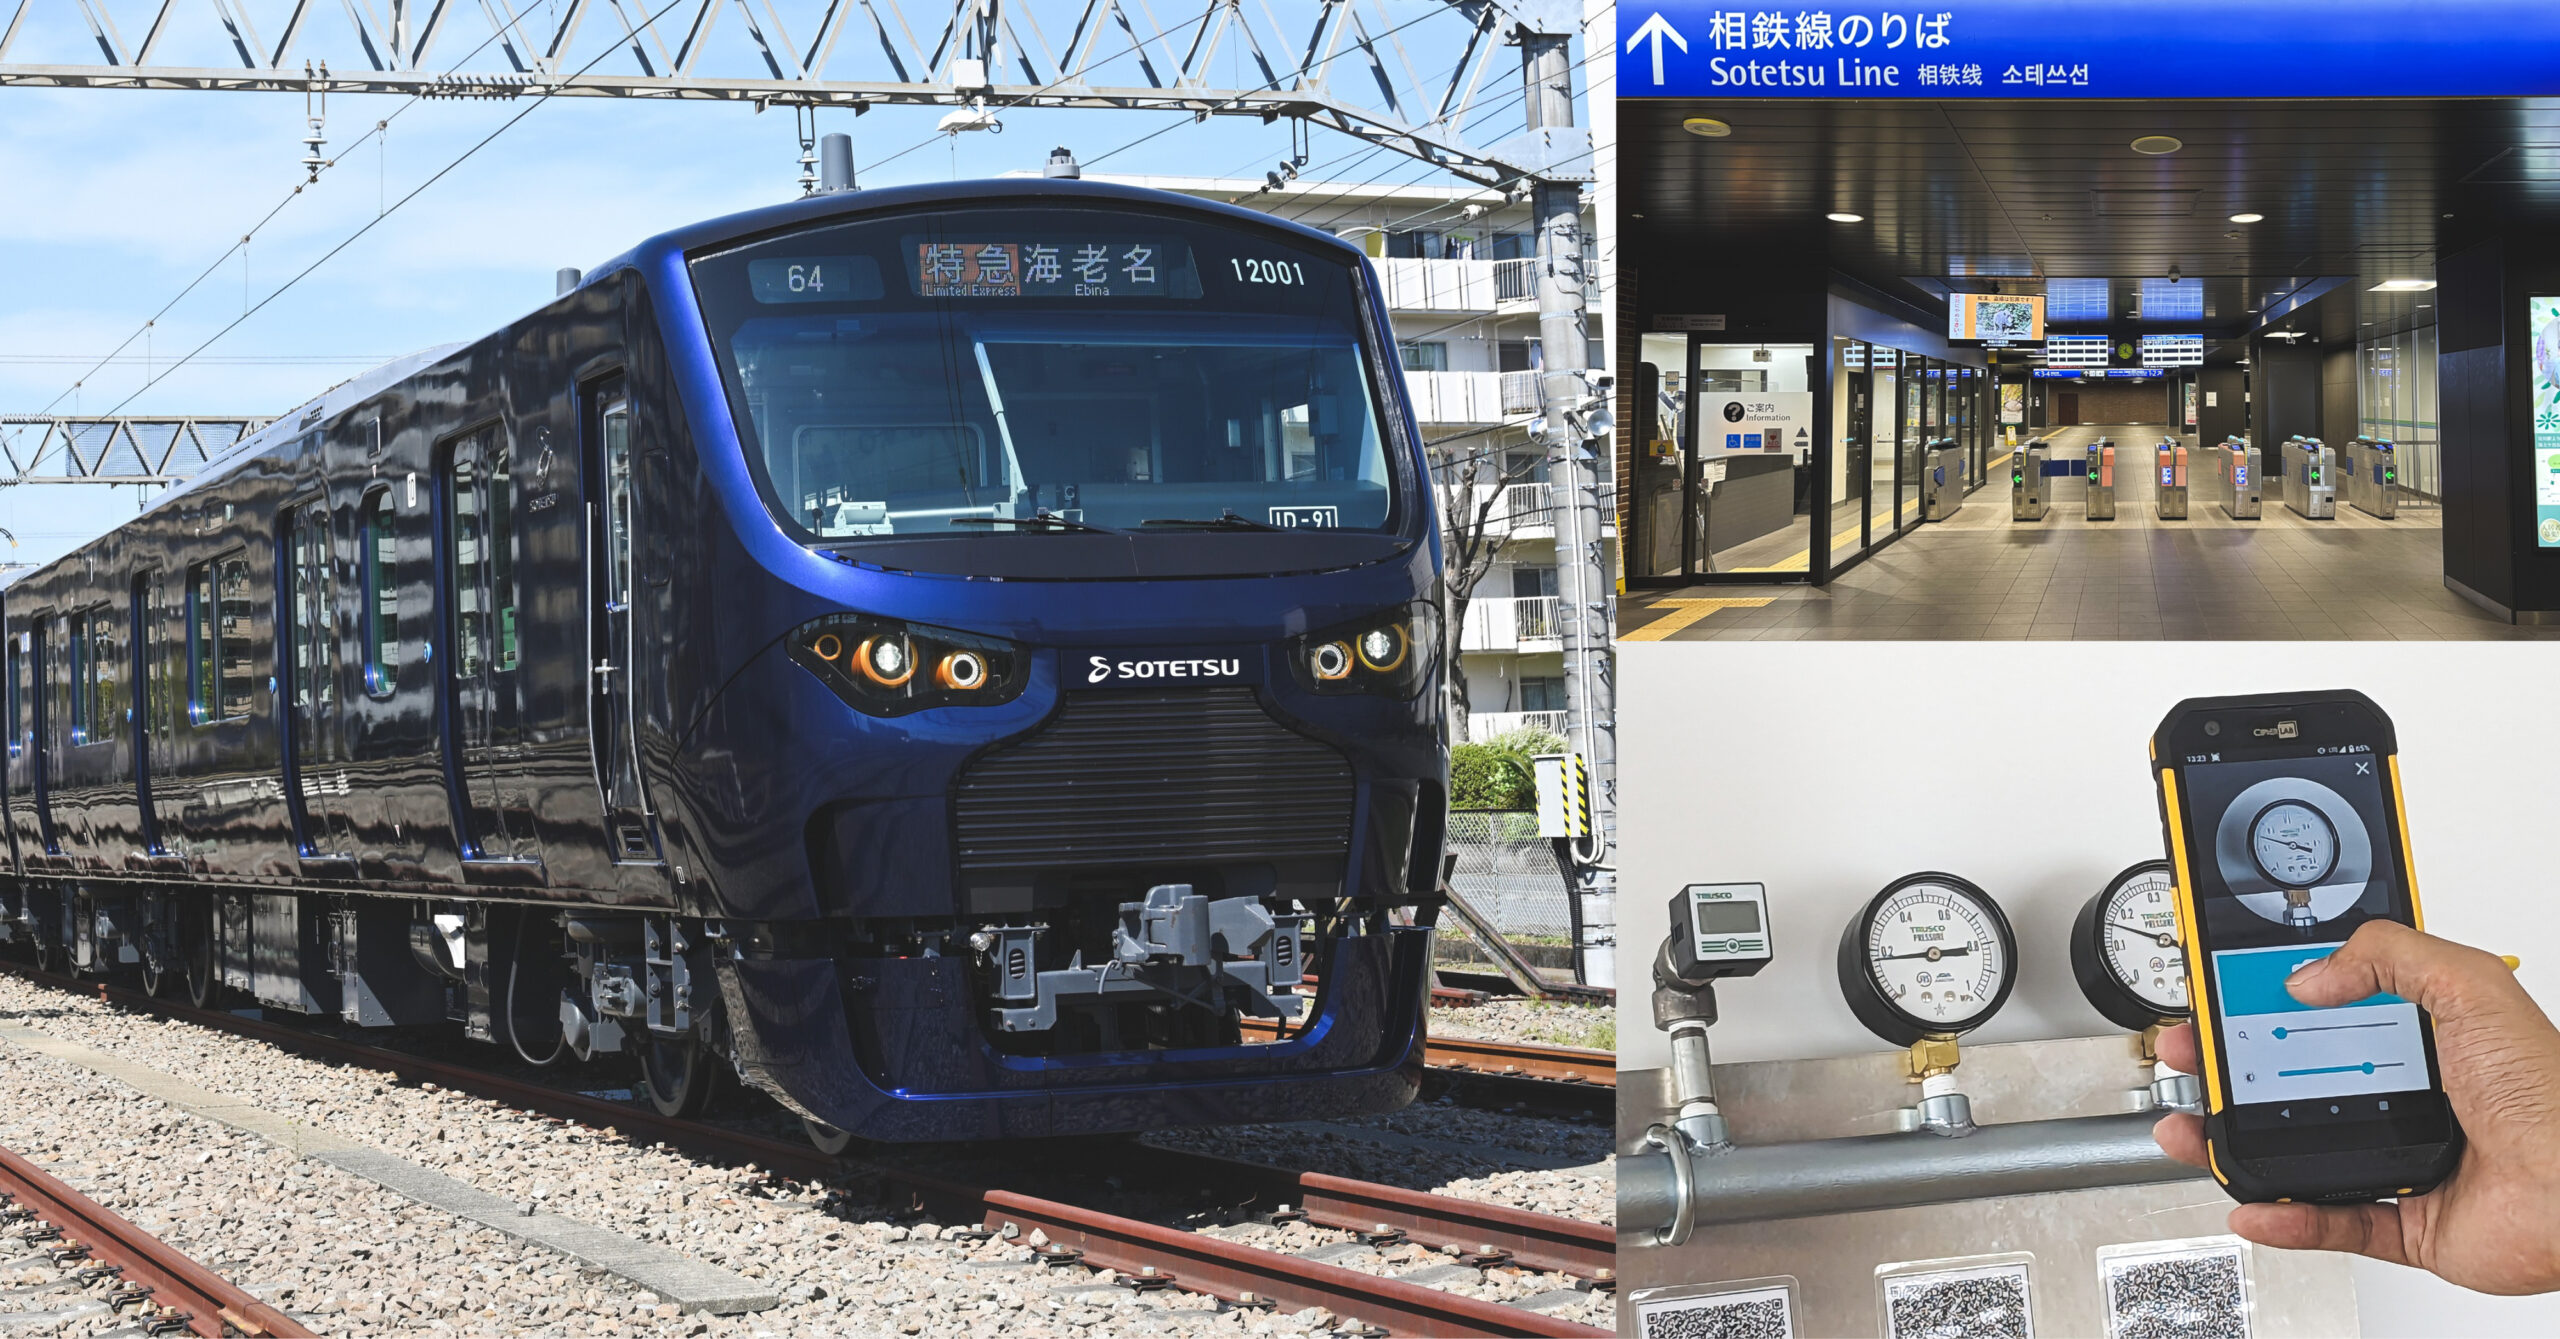 JSP Co Ltd Yokohama moni-meter app Sotetsu Line